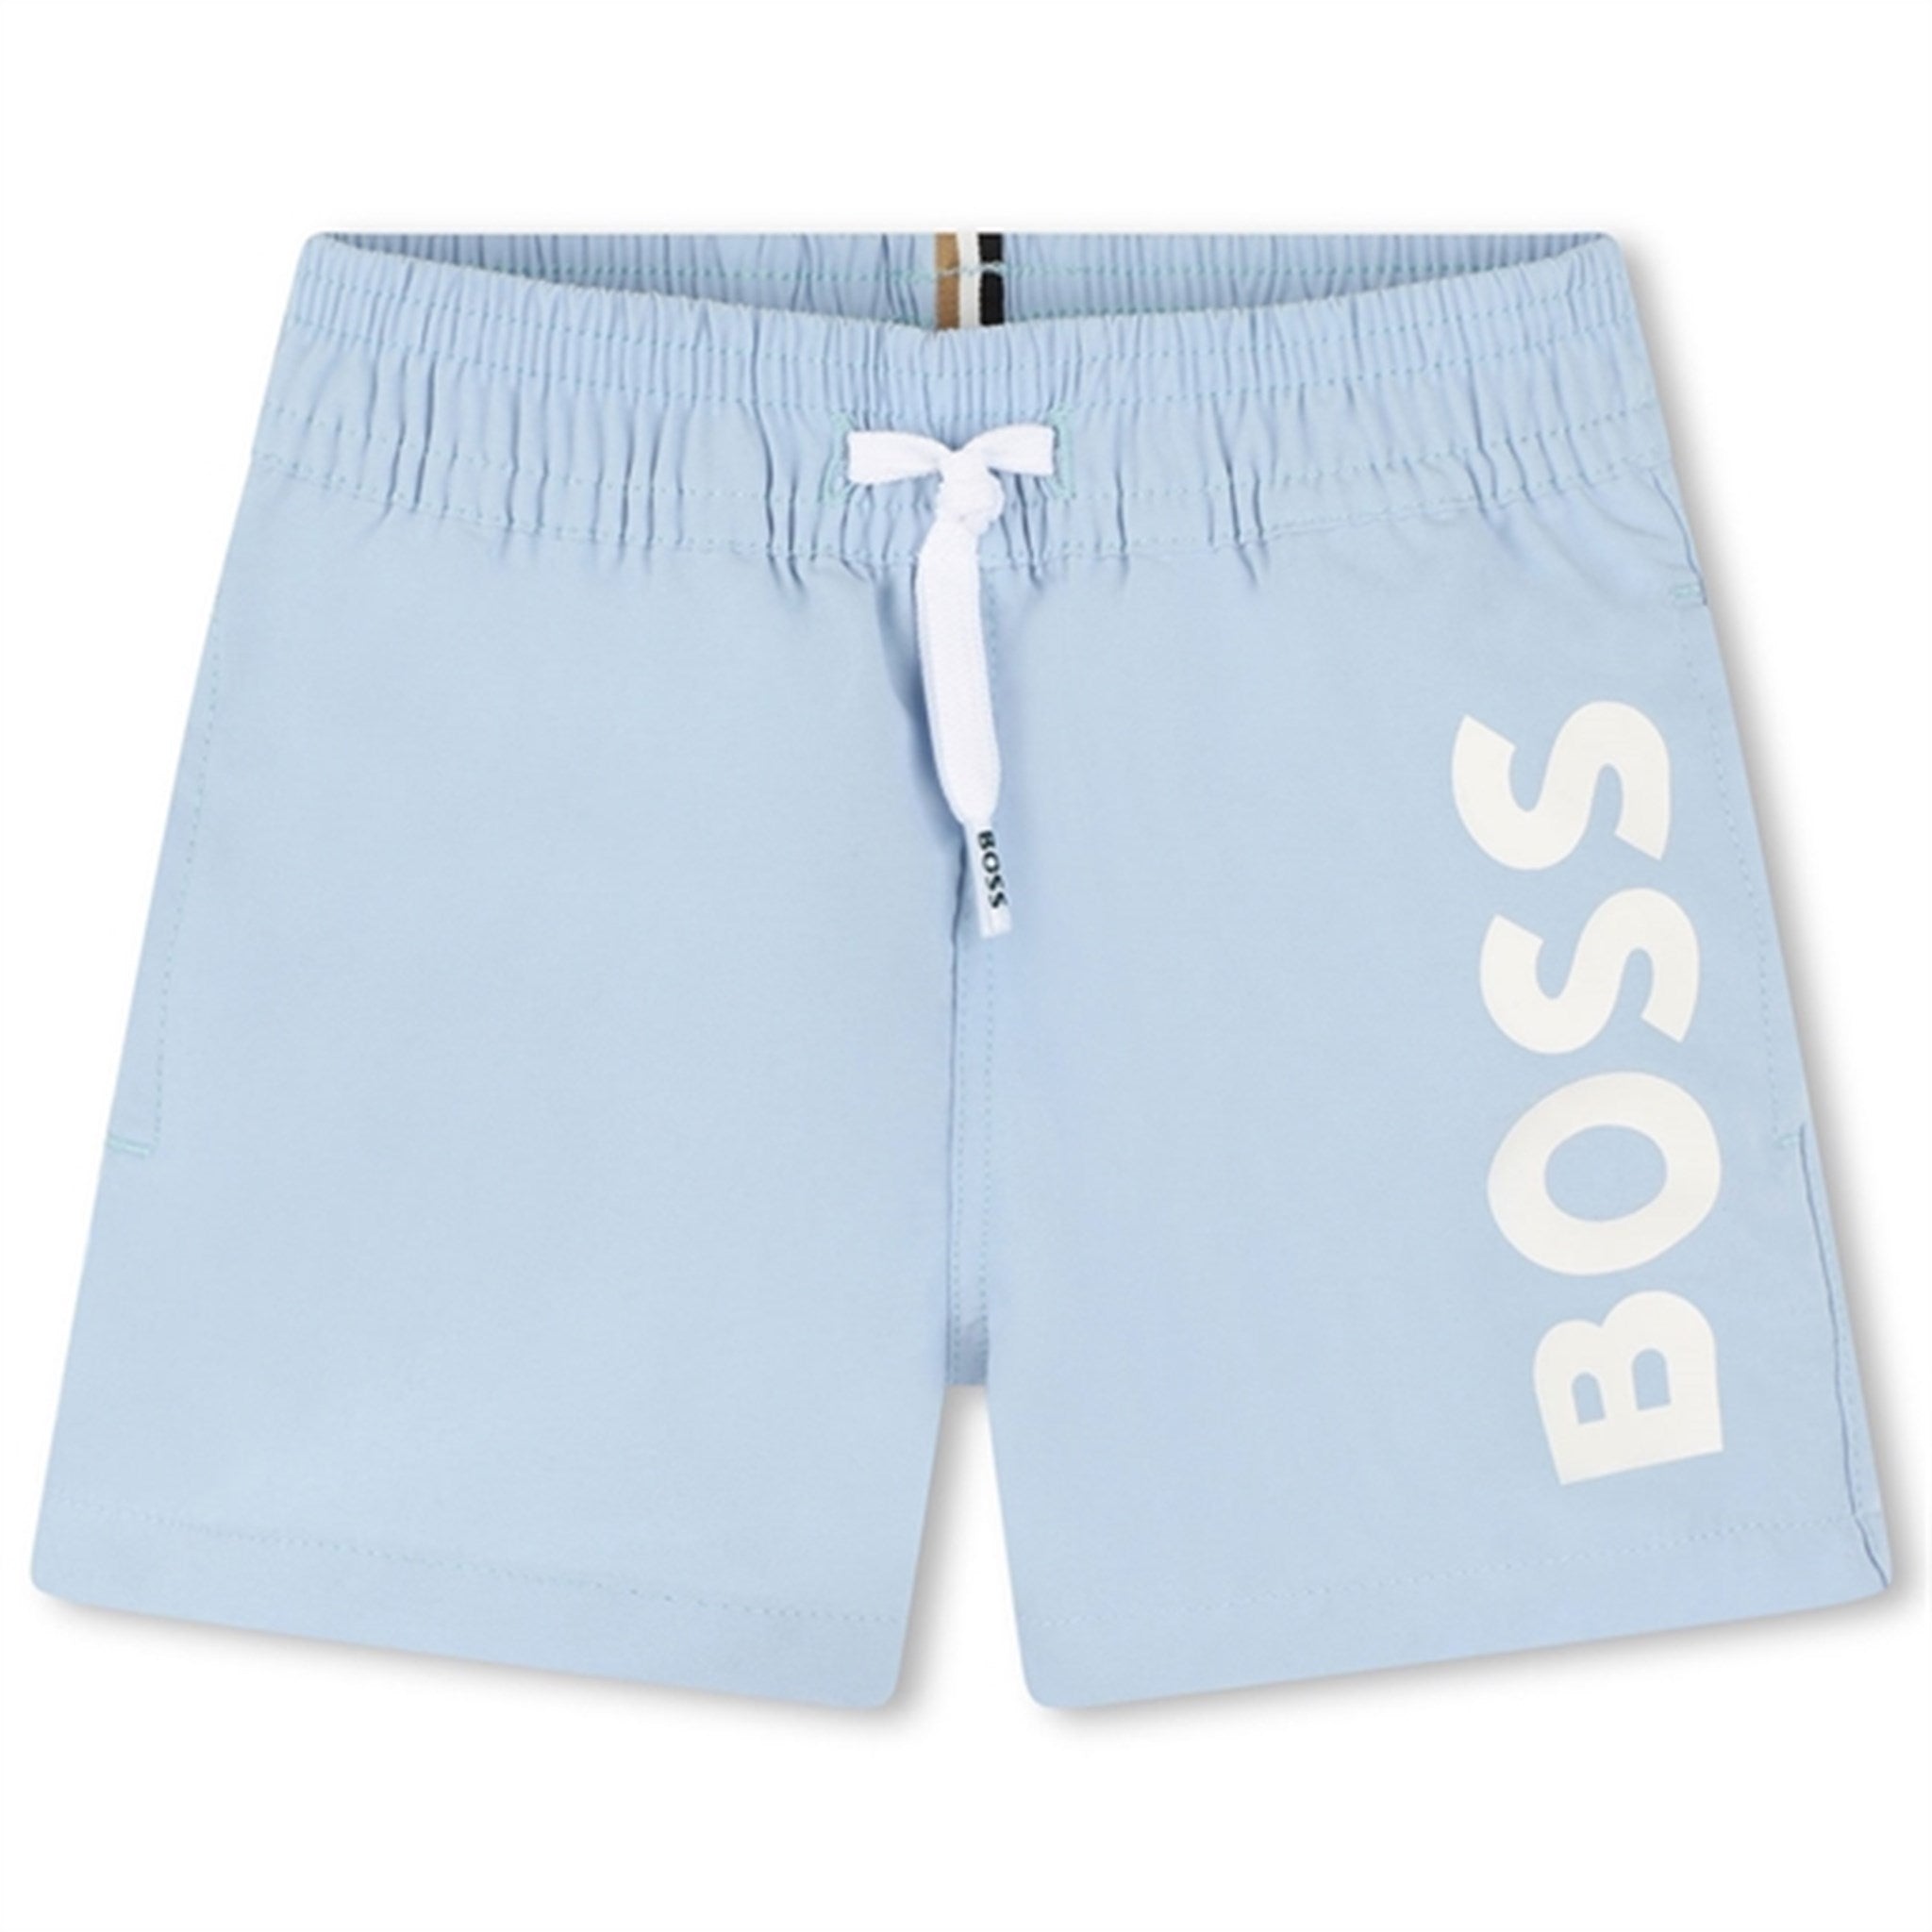 Hugo Boss Pale Blue Swim Shorts